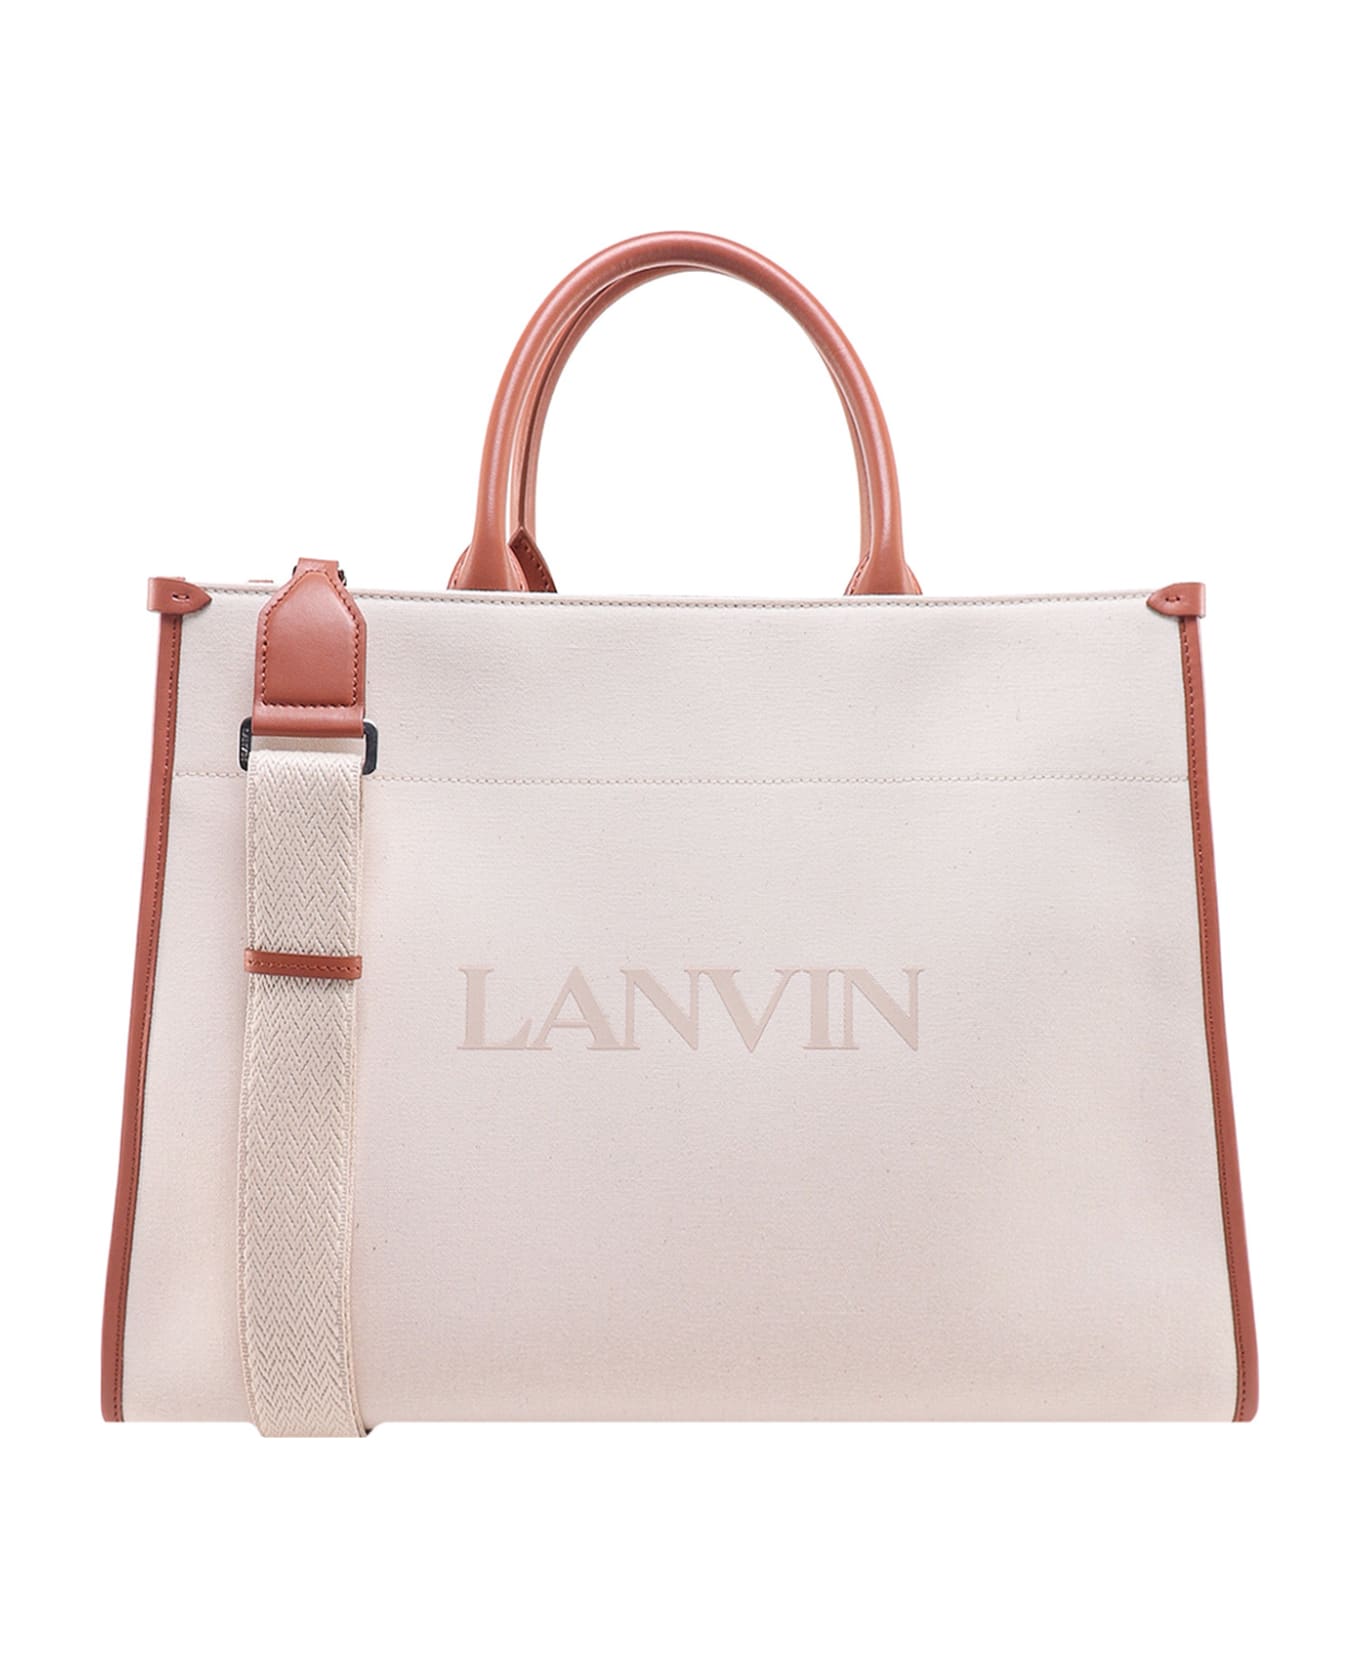 Lanvin Handbag - Beige